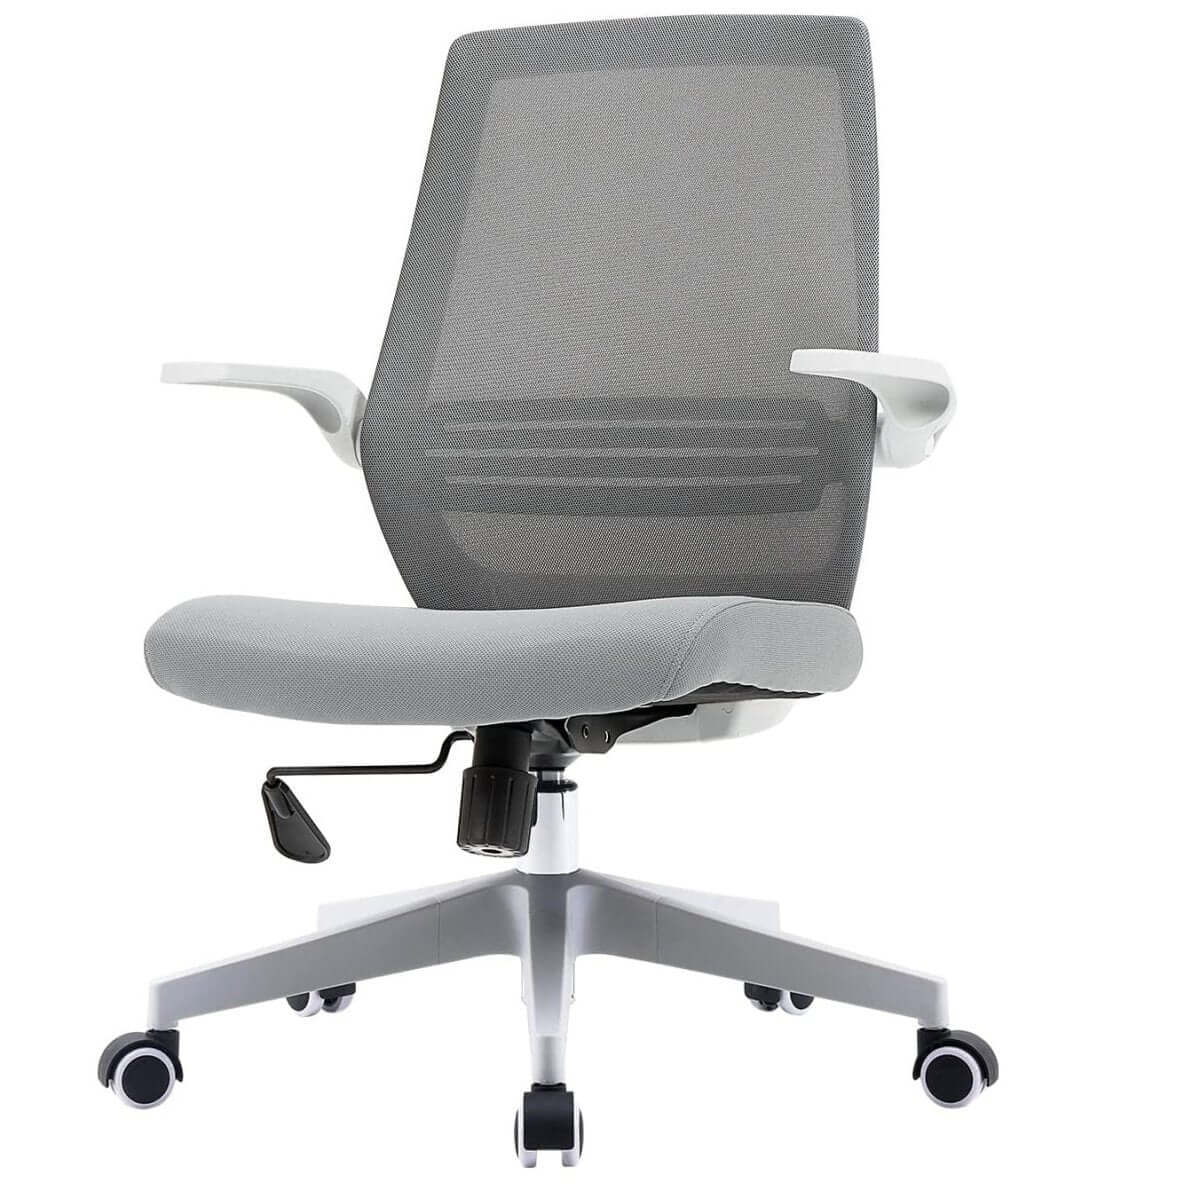 SIHOO M76 Ergonomic Office Chair Swivel Desk Chair Height Adjustable Mesh Back Computer Chair with Lumbar Support, 90° Flip-up Armrest Grey-Upinteriors